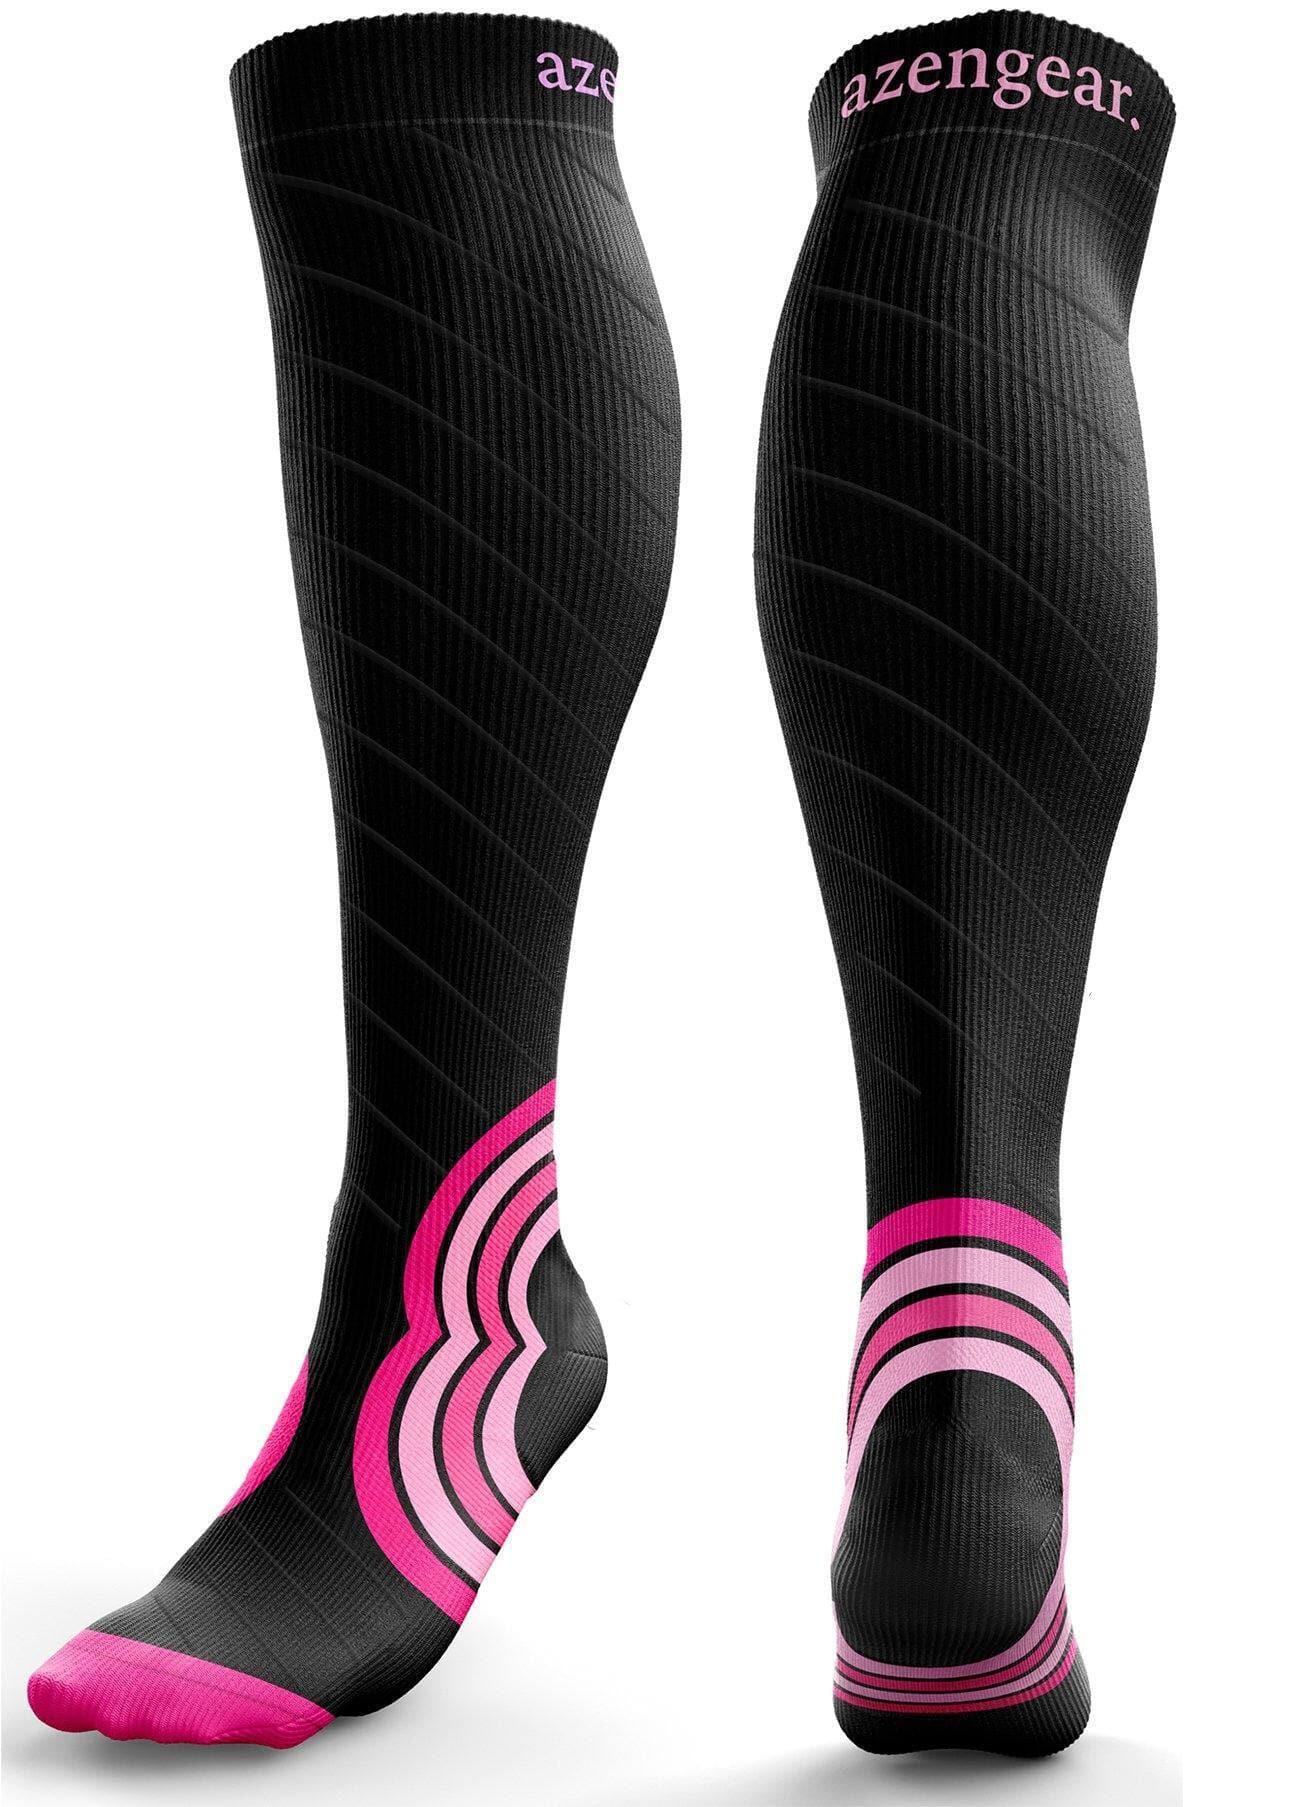 AZENGEAR Calf Support Compression Socks for Men & Women (20-30 mmHg)(Black w/Pink)